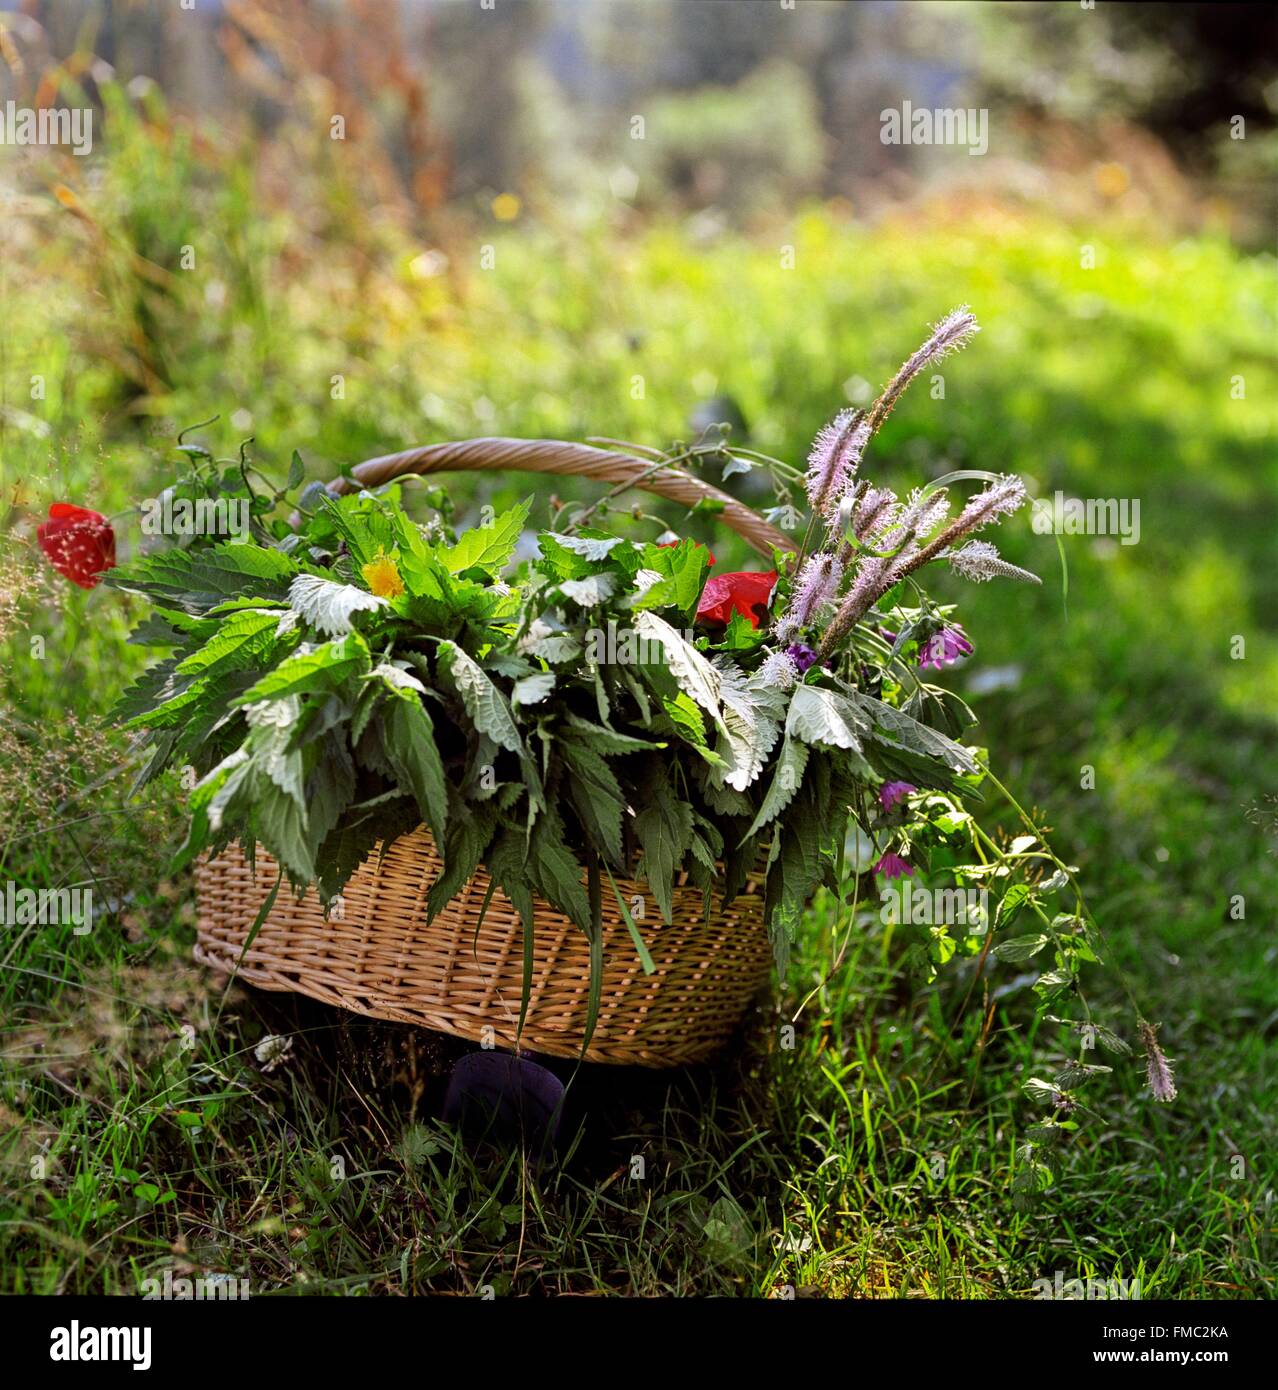 France, Basket of edible wild plants Stock Photo